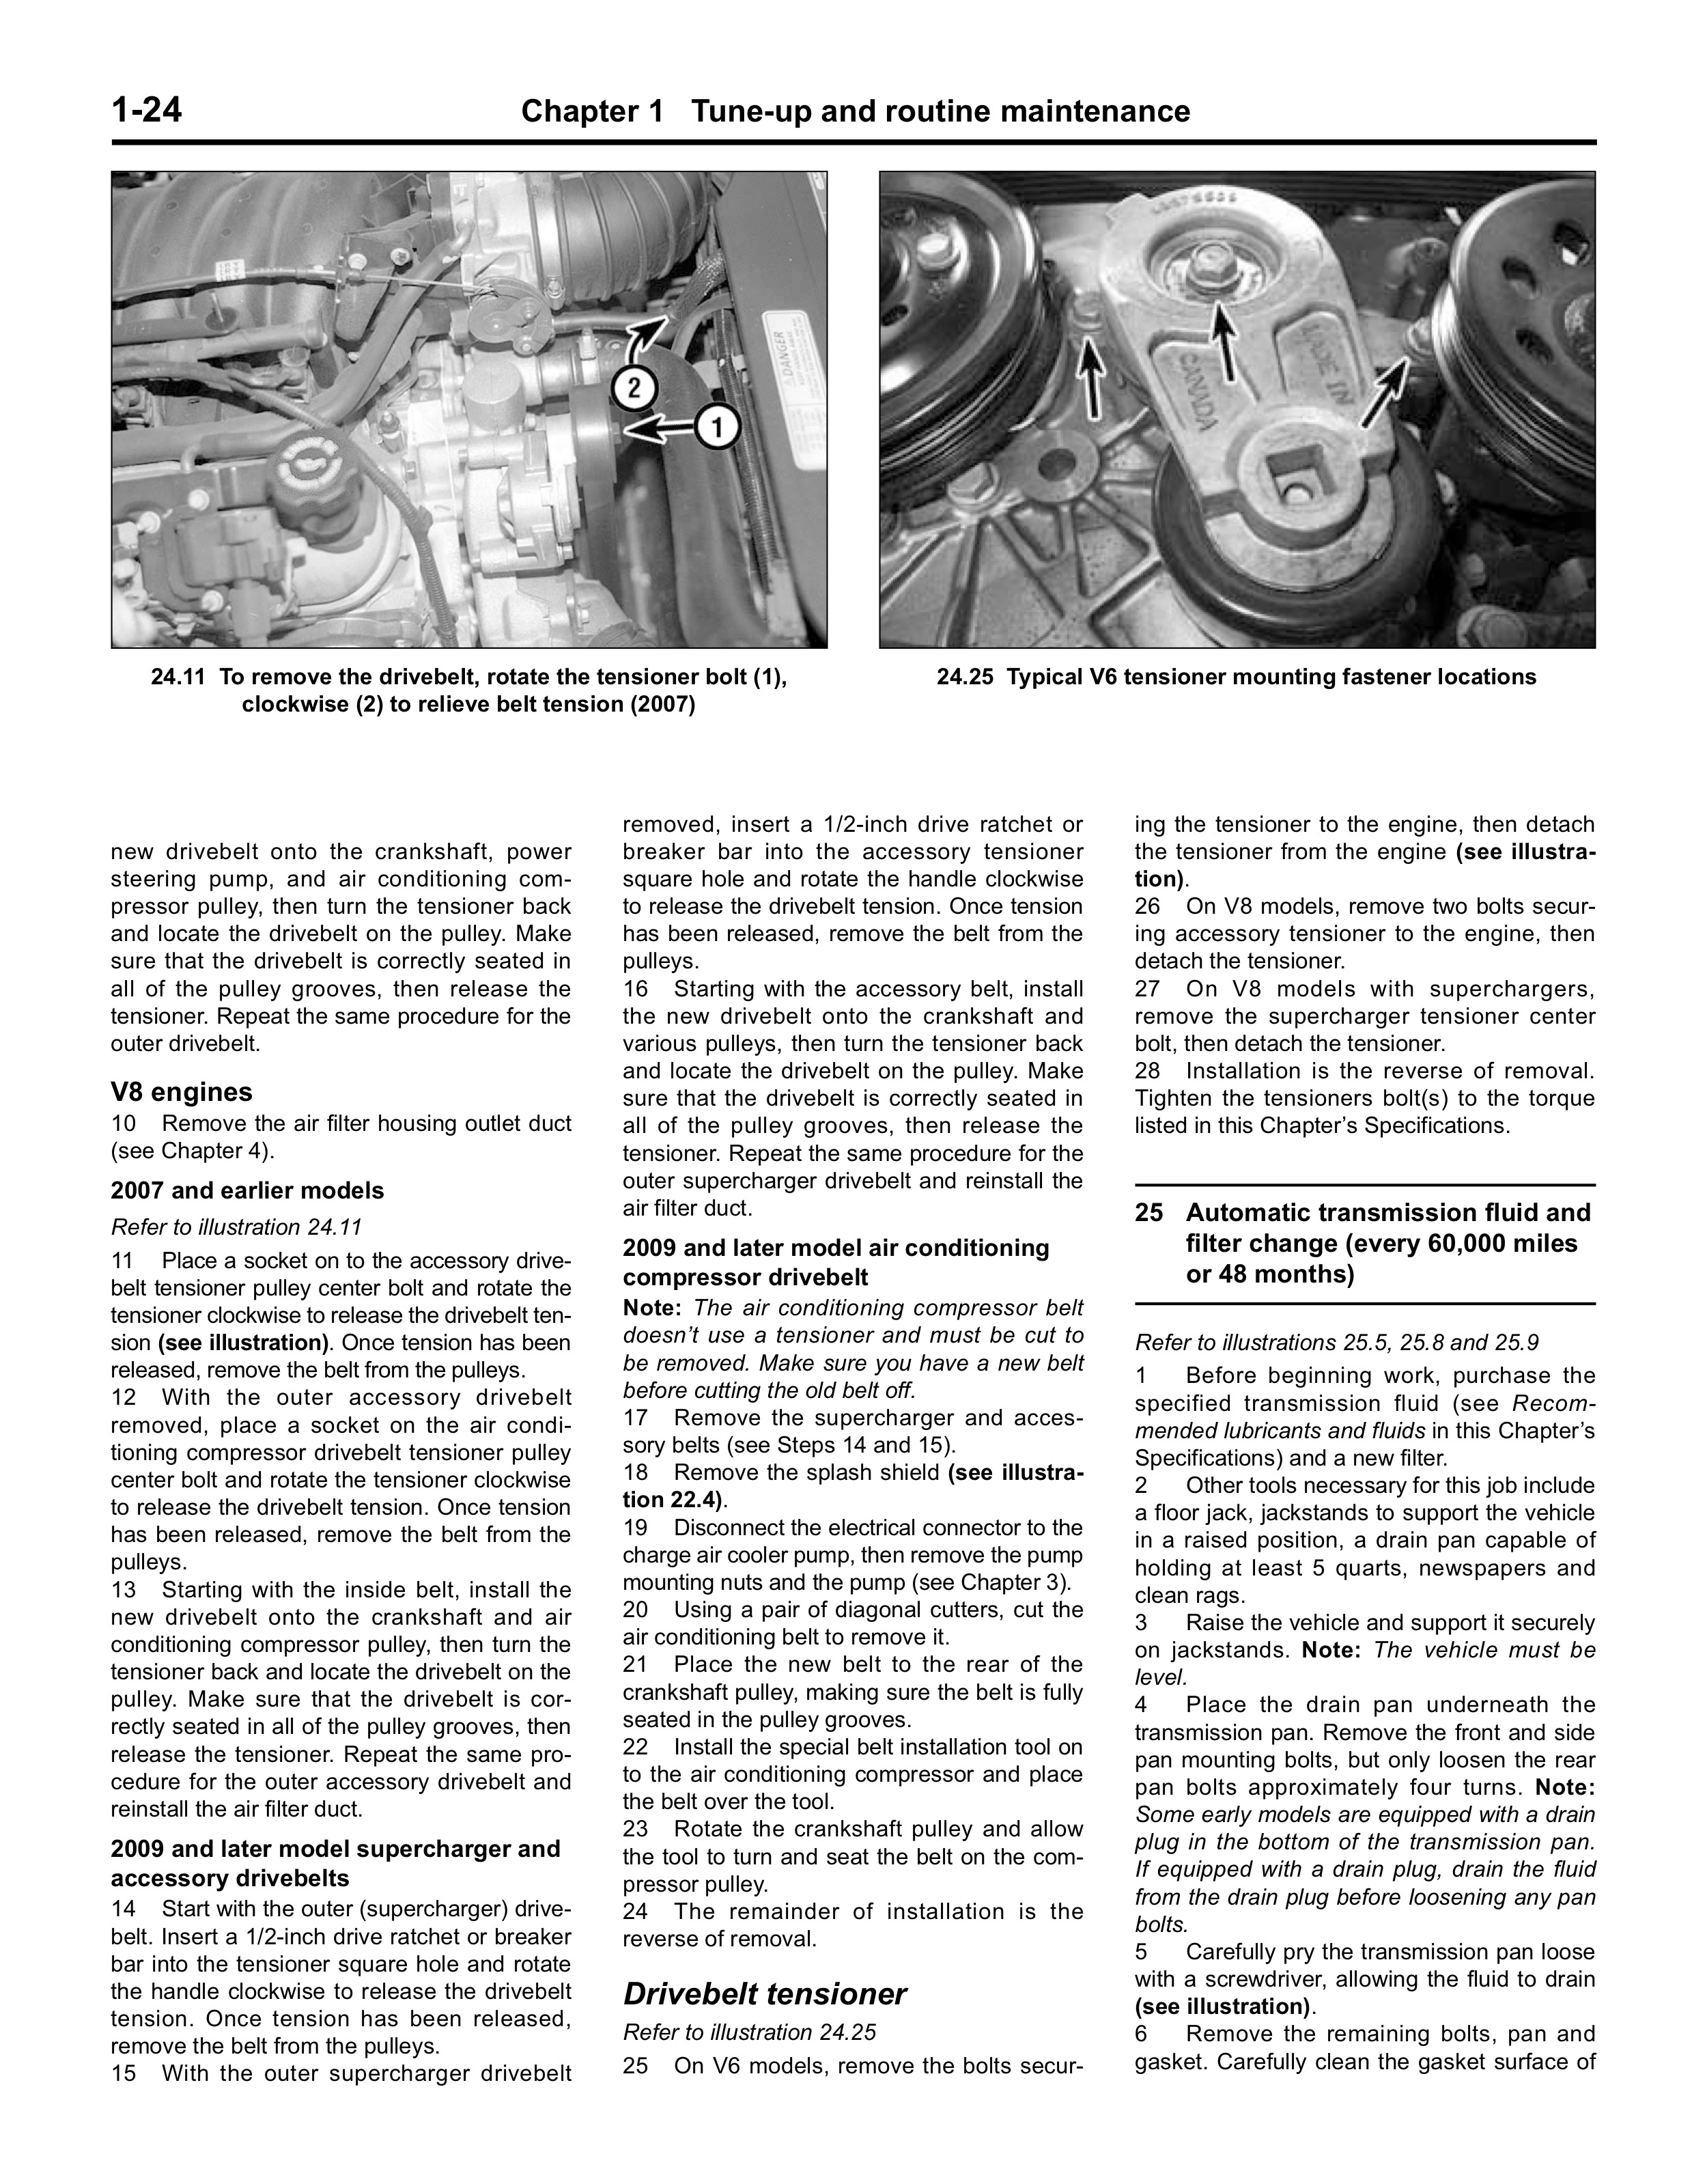 1996 Ford F150 Repair Manual Download newmotorcycle